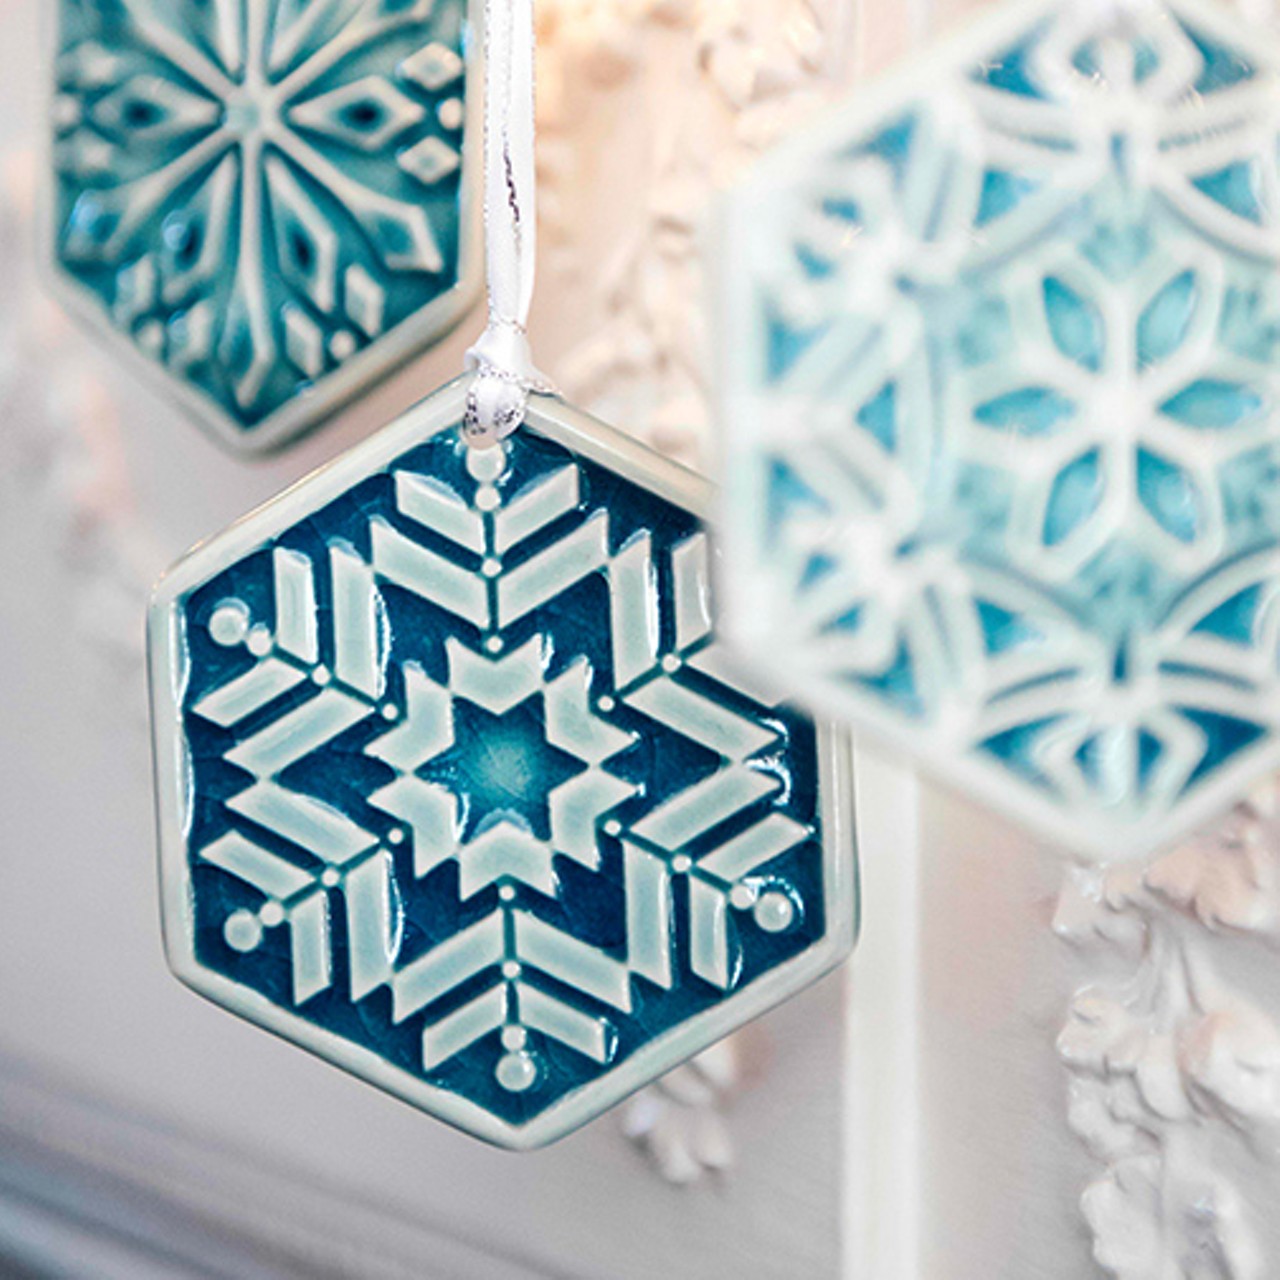 Snowflake ornament.